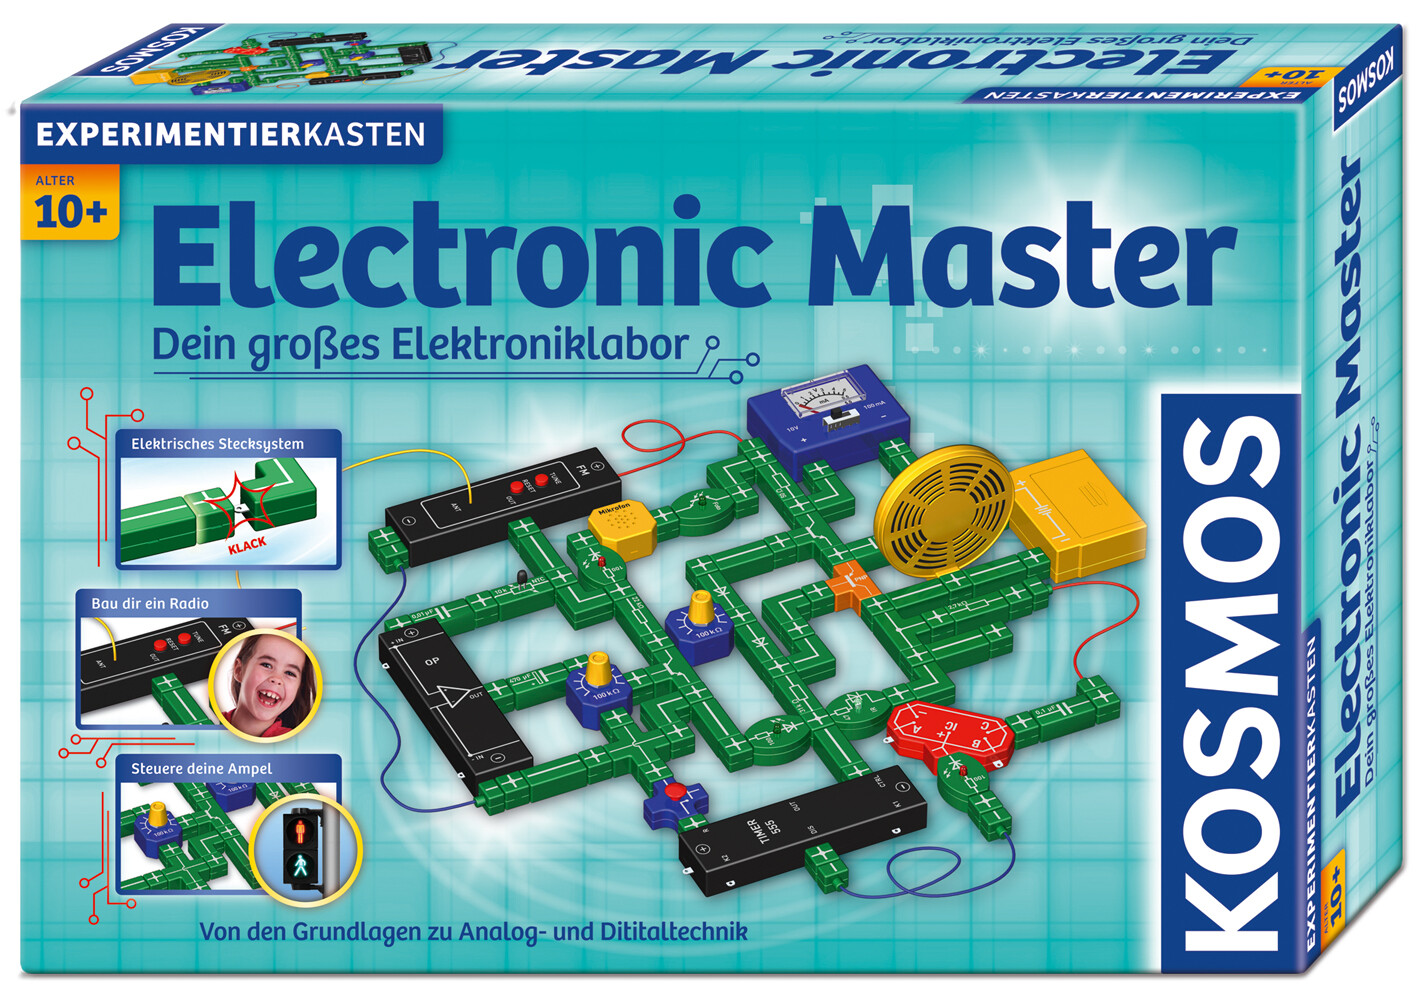 Experimentierkasten Electronic Master